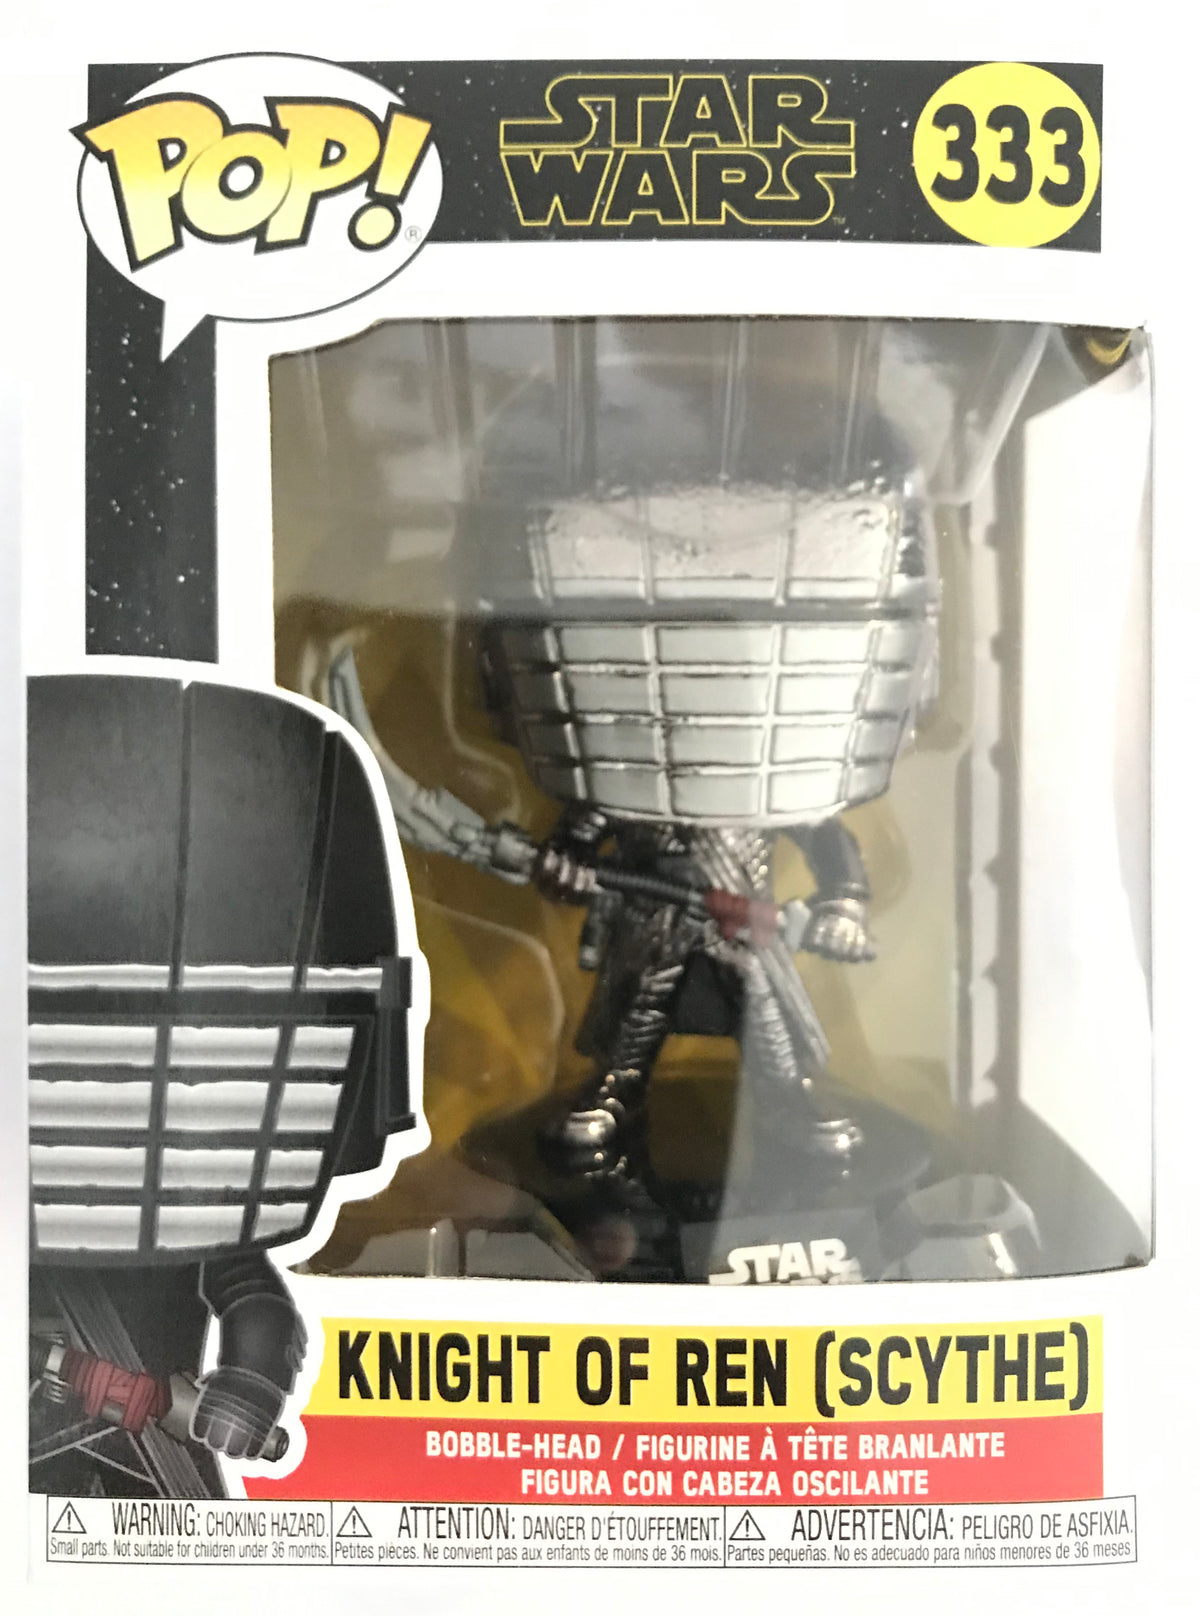 Knight of Ren (Scythe) (333)